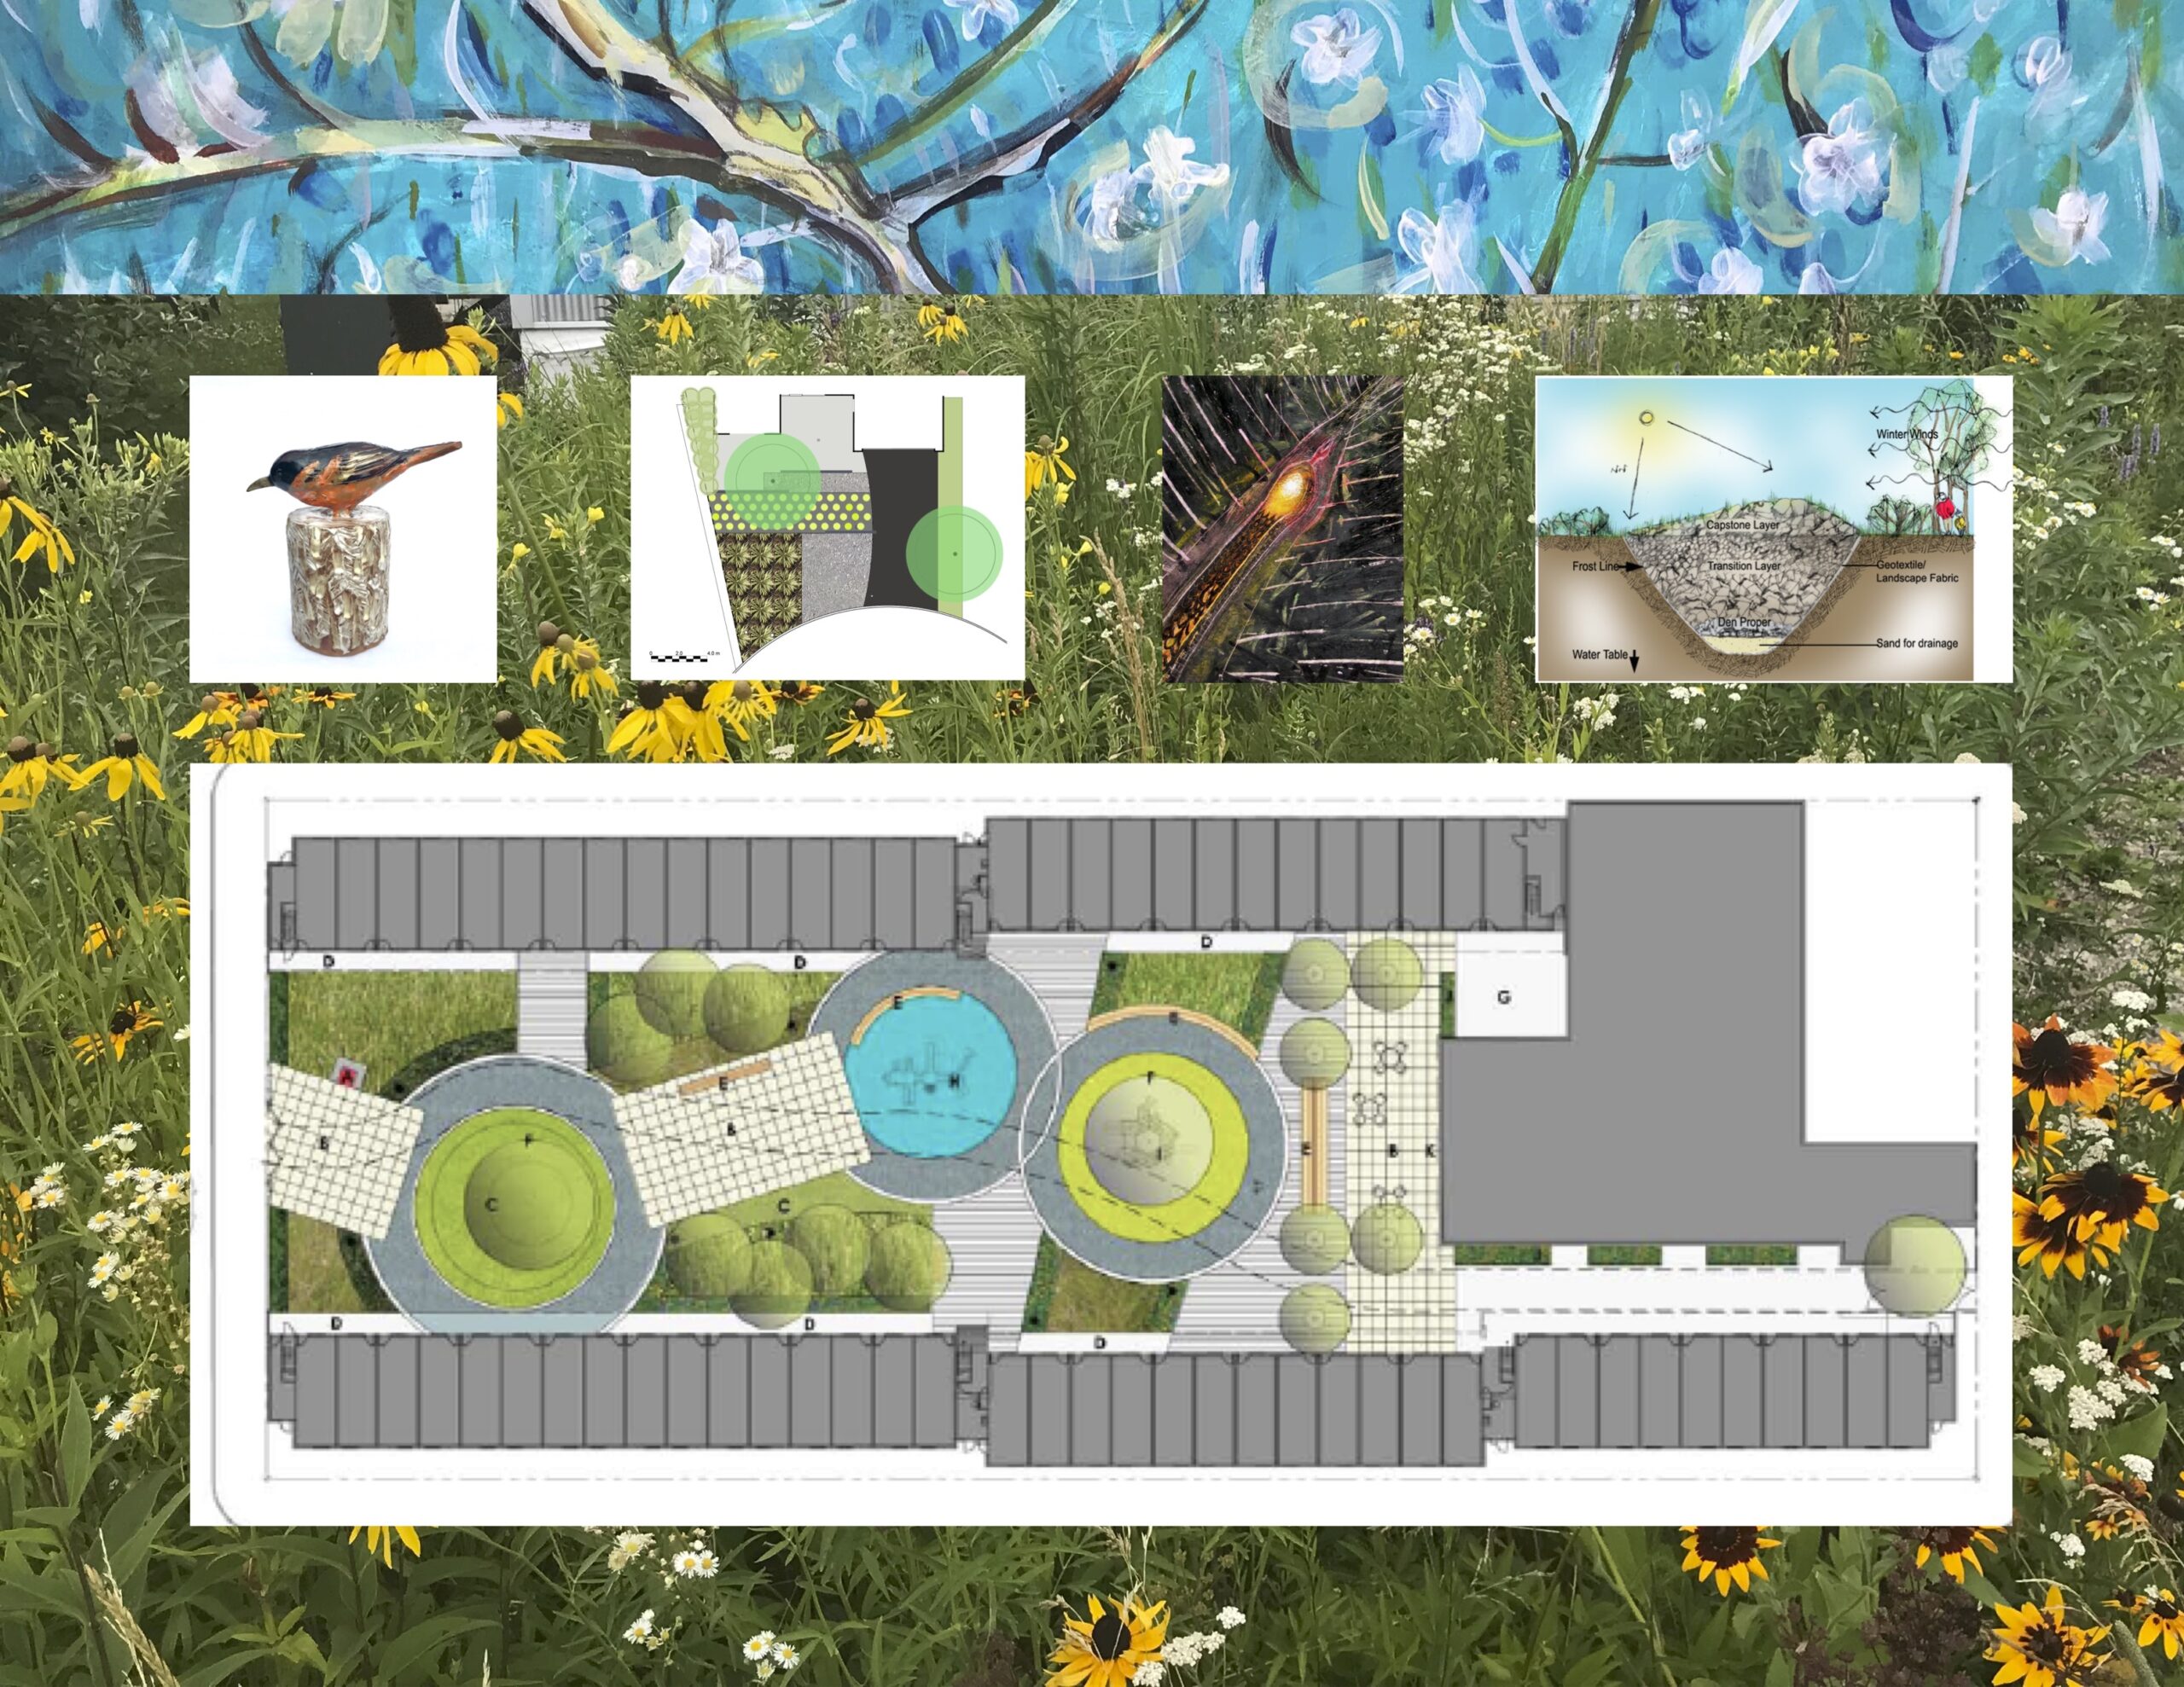 Image showing designs for habitat, landscape architecture, ecological art.